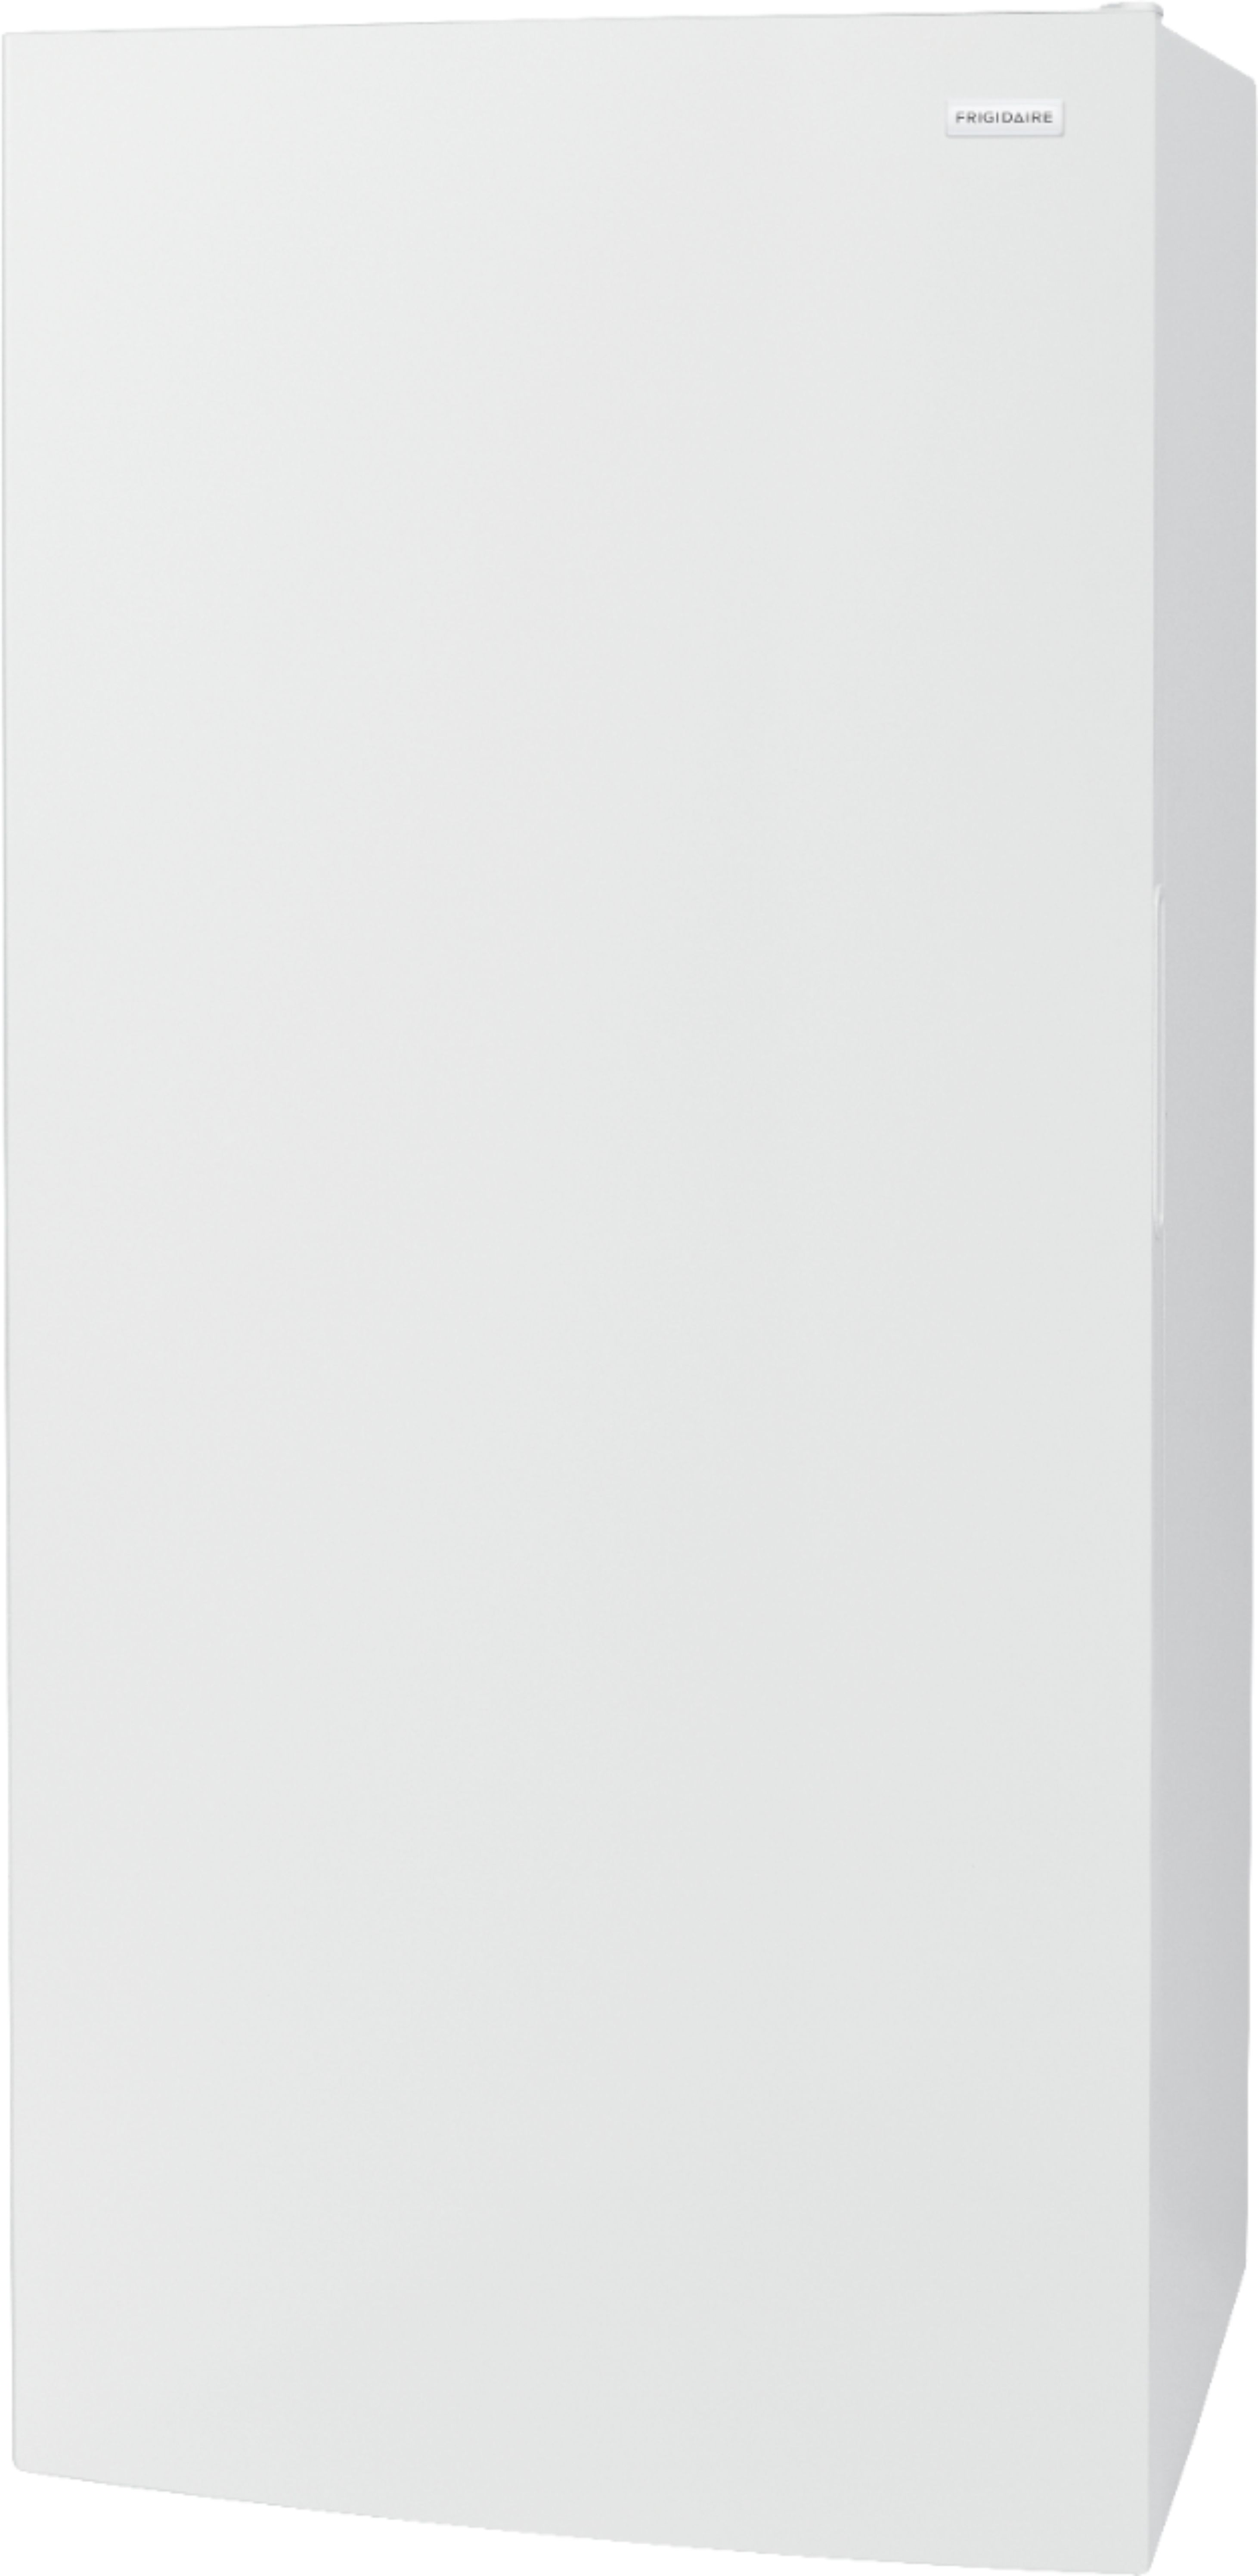 Frigidaire - 20.0 Cu. Ft. Upright Freezer with Interior Light - White